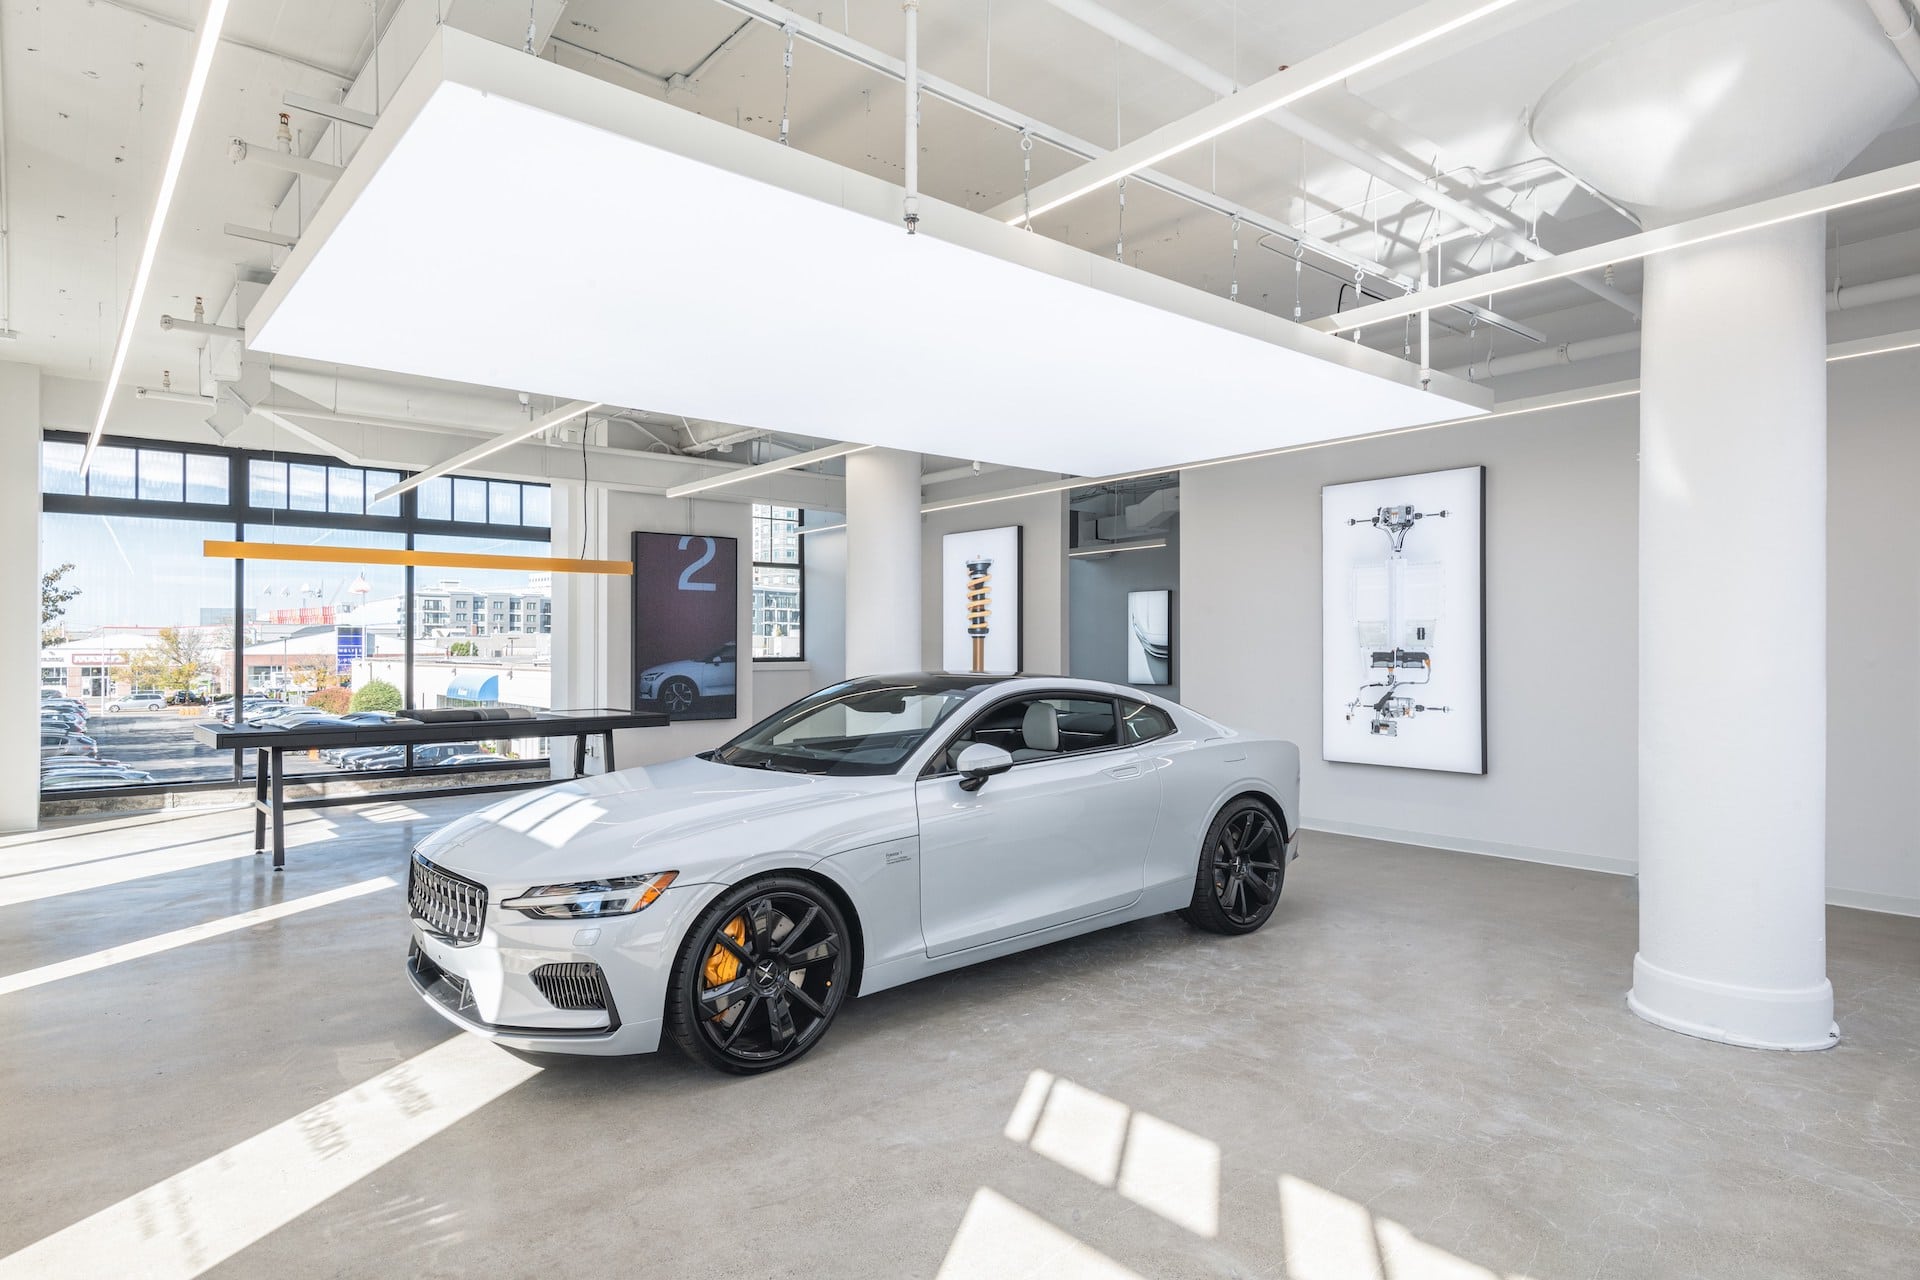 Electric Car Brand Polestar Opens First Boston Showroom